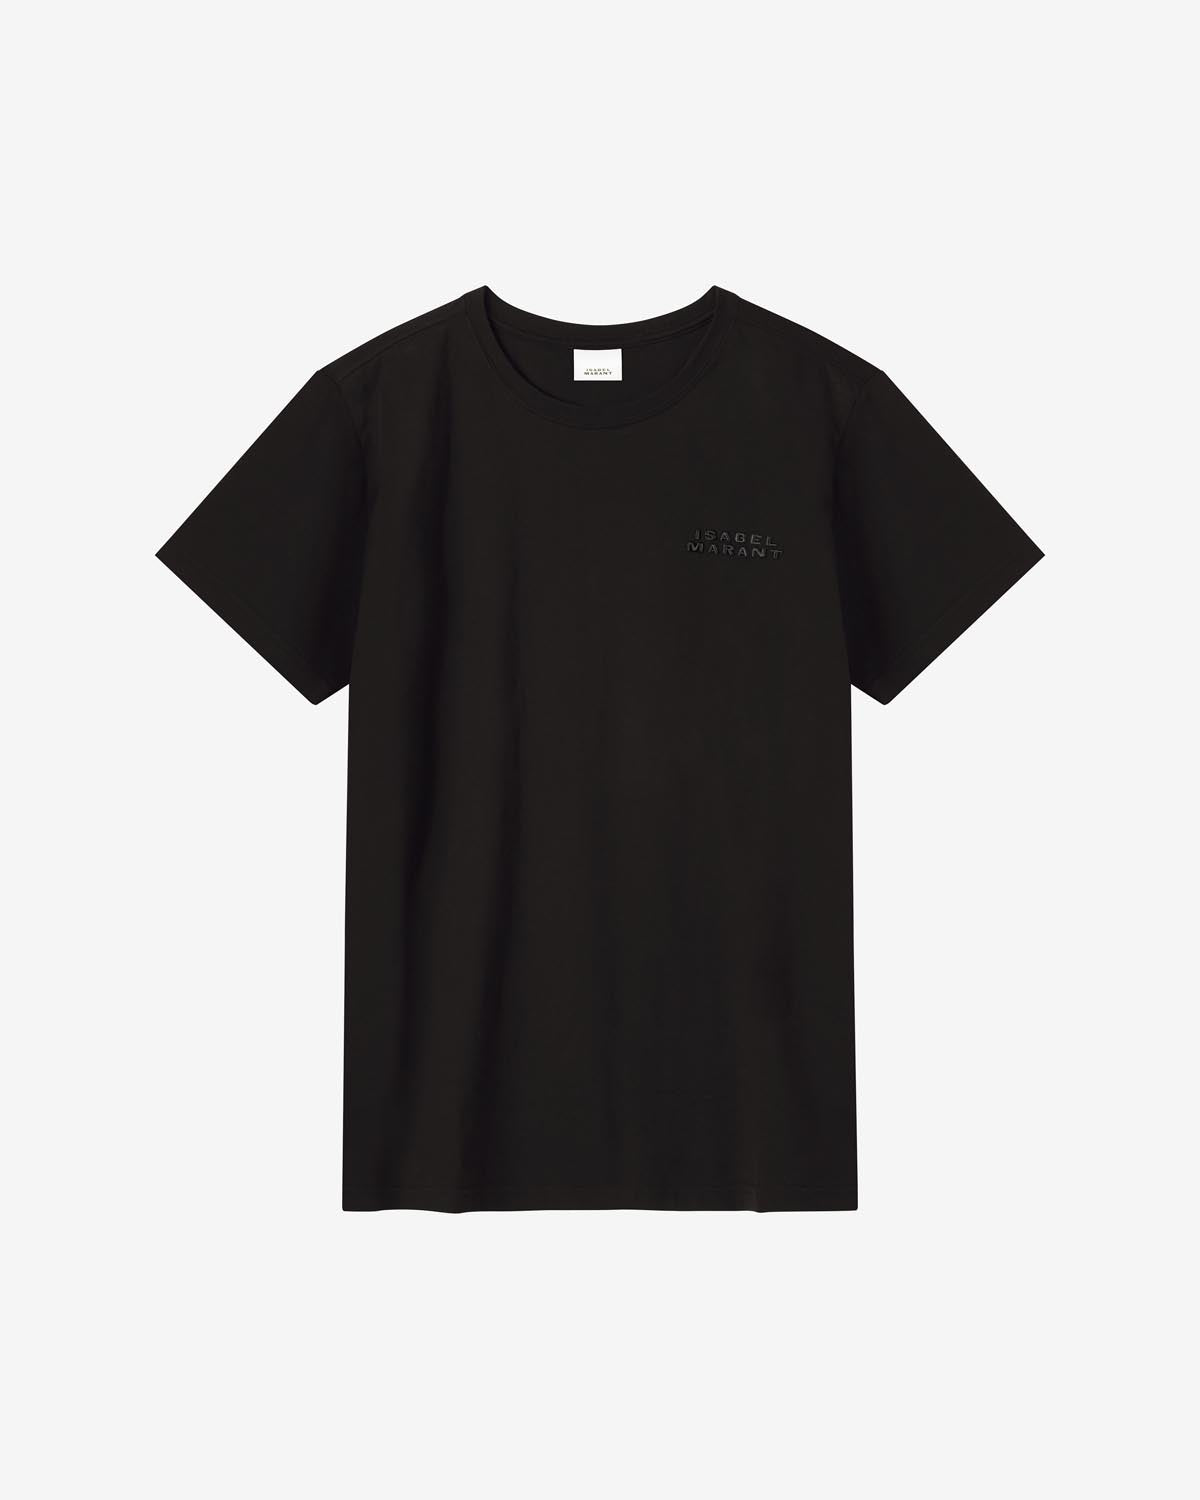 Vidal 로고 티셔츠 Woman 검은색 2